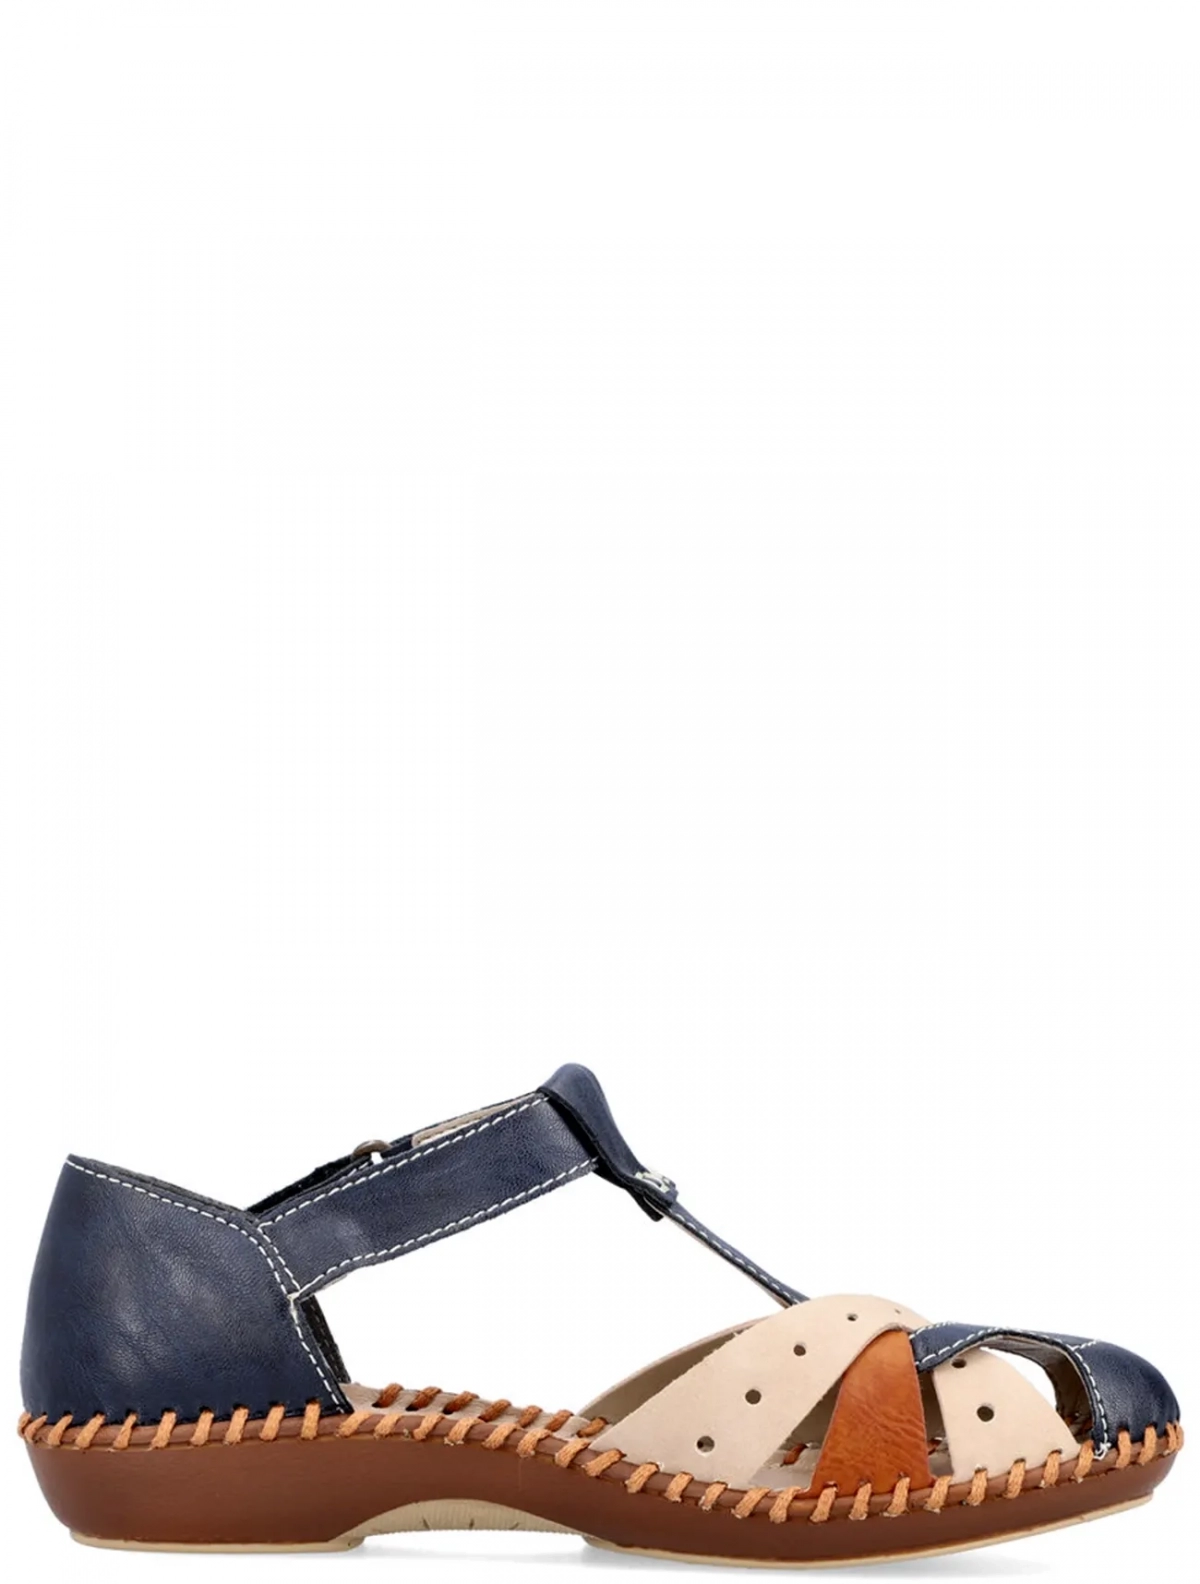 Rieker M1655-14 женские сандали